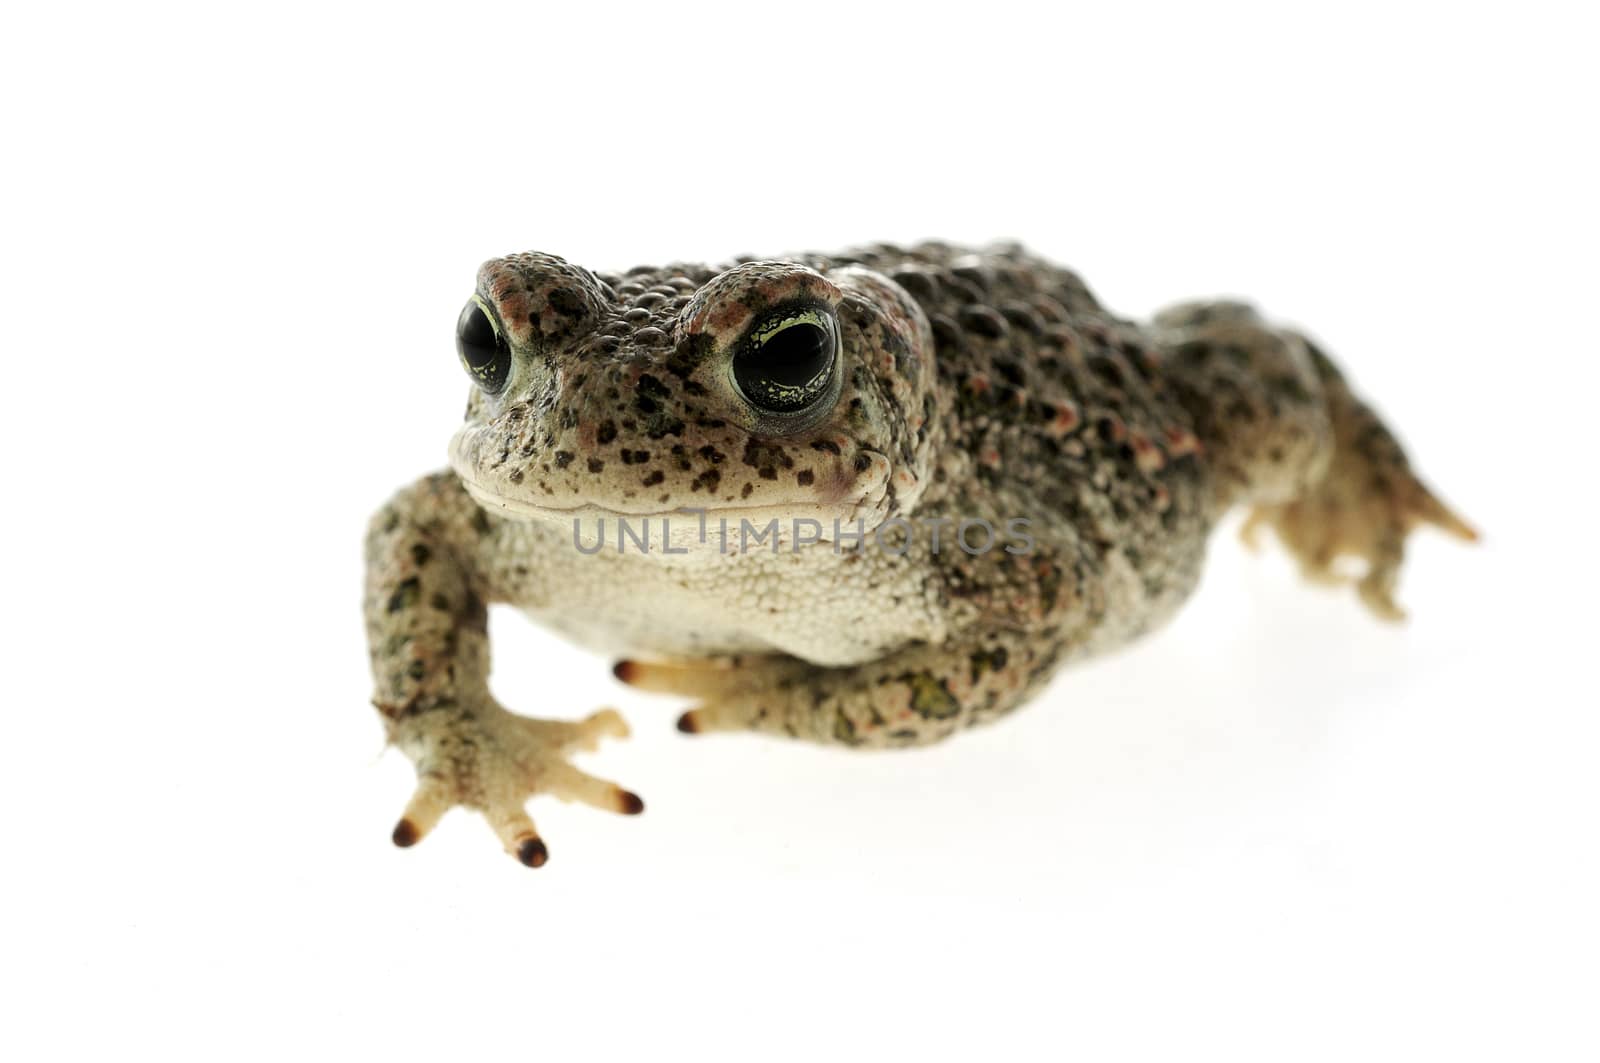 Natterjack toad (Epidalea calamita) with White background